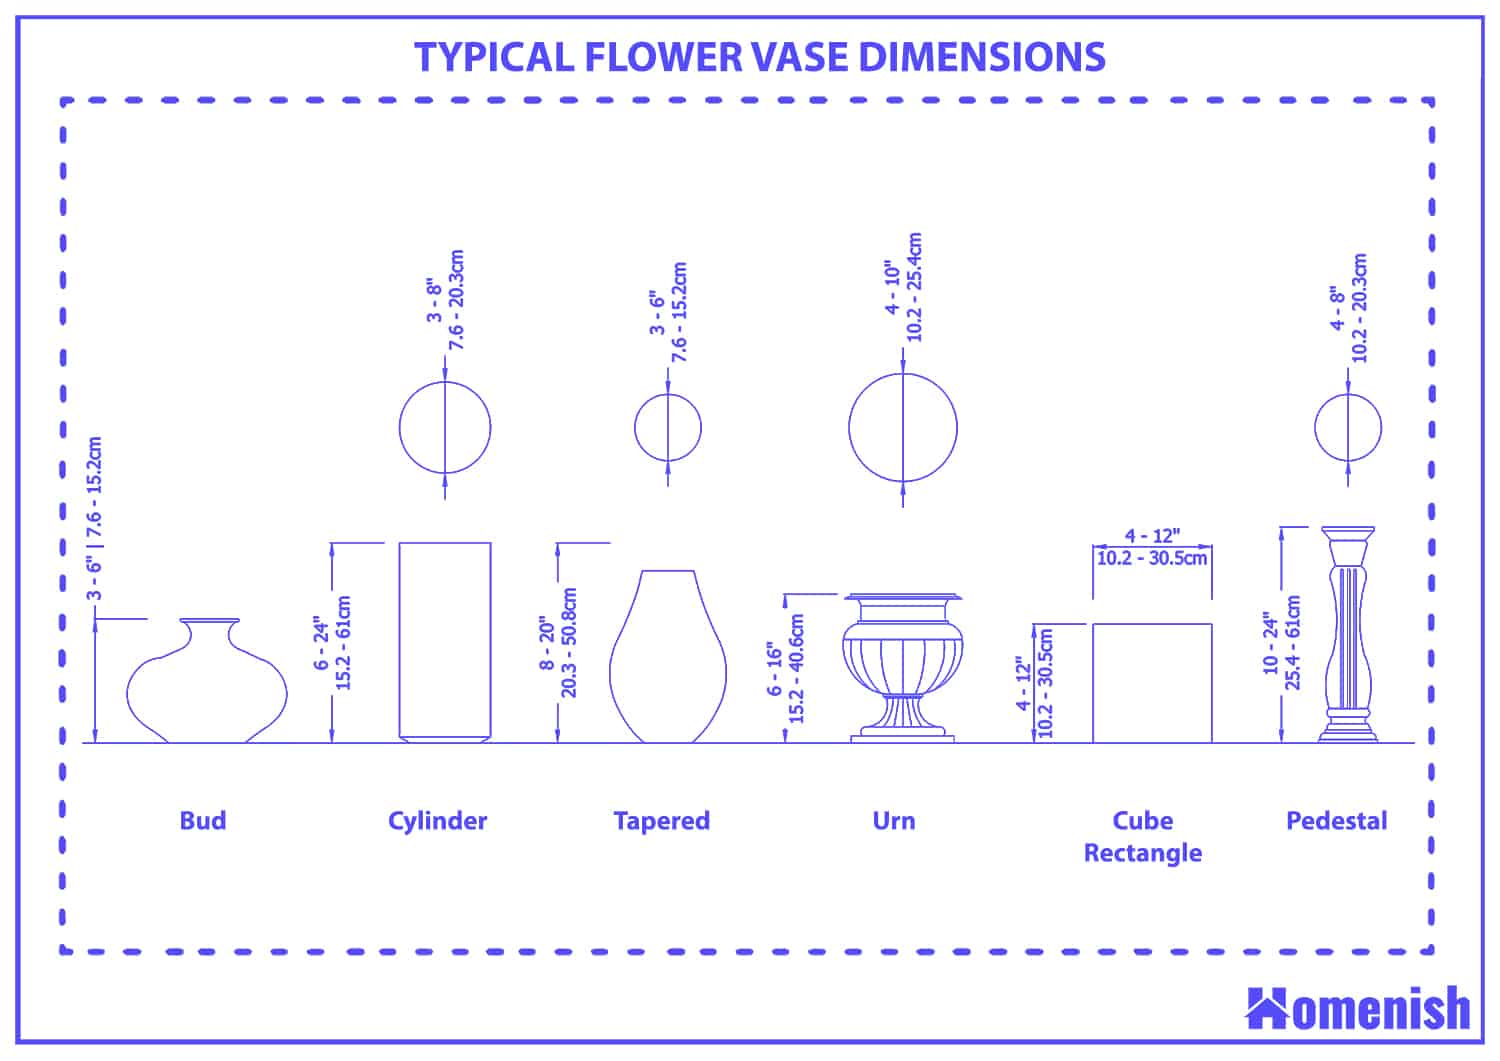 Typical flower vase dimensions